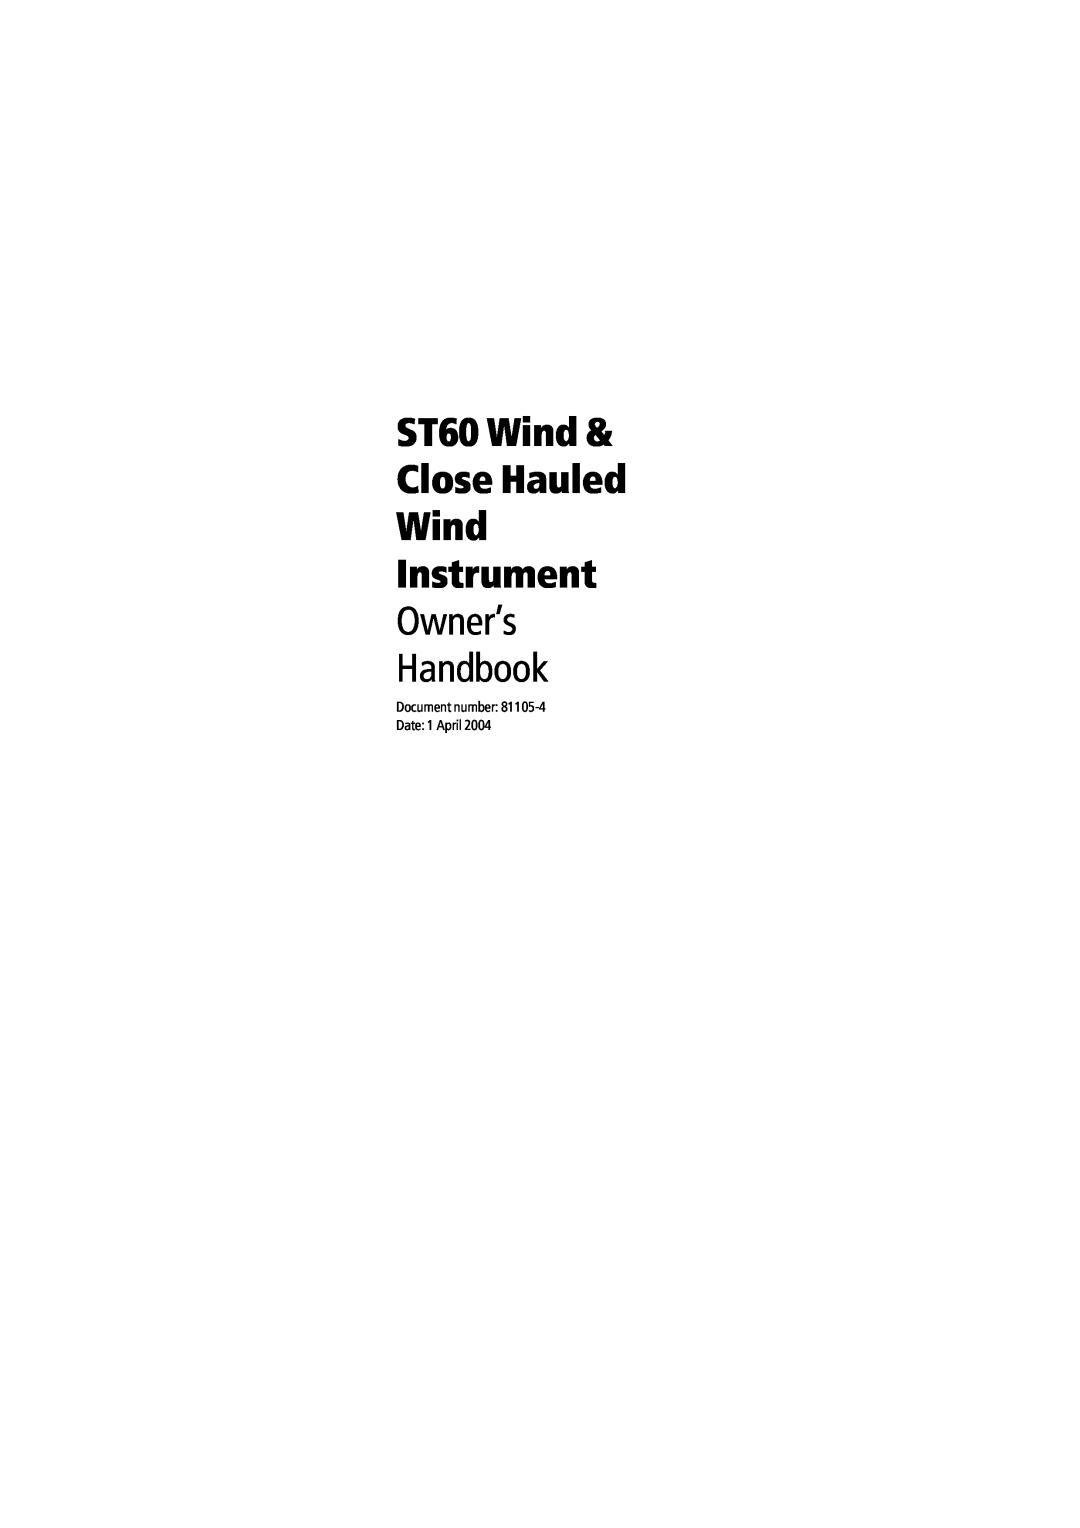 Raymarine manual ST60 Wind Close Hauled Wind Instrument, Owner’s Handbook 